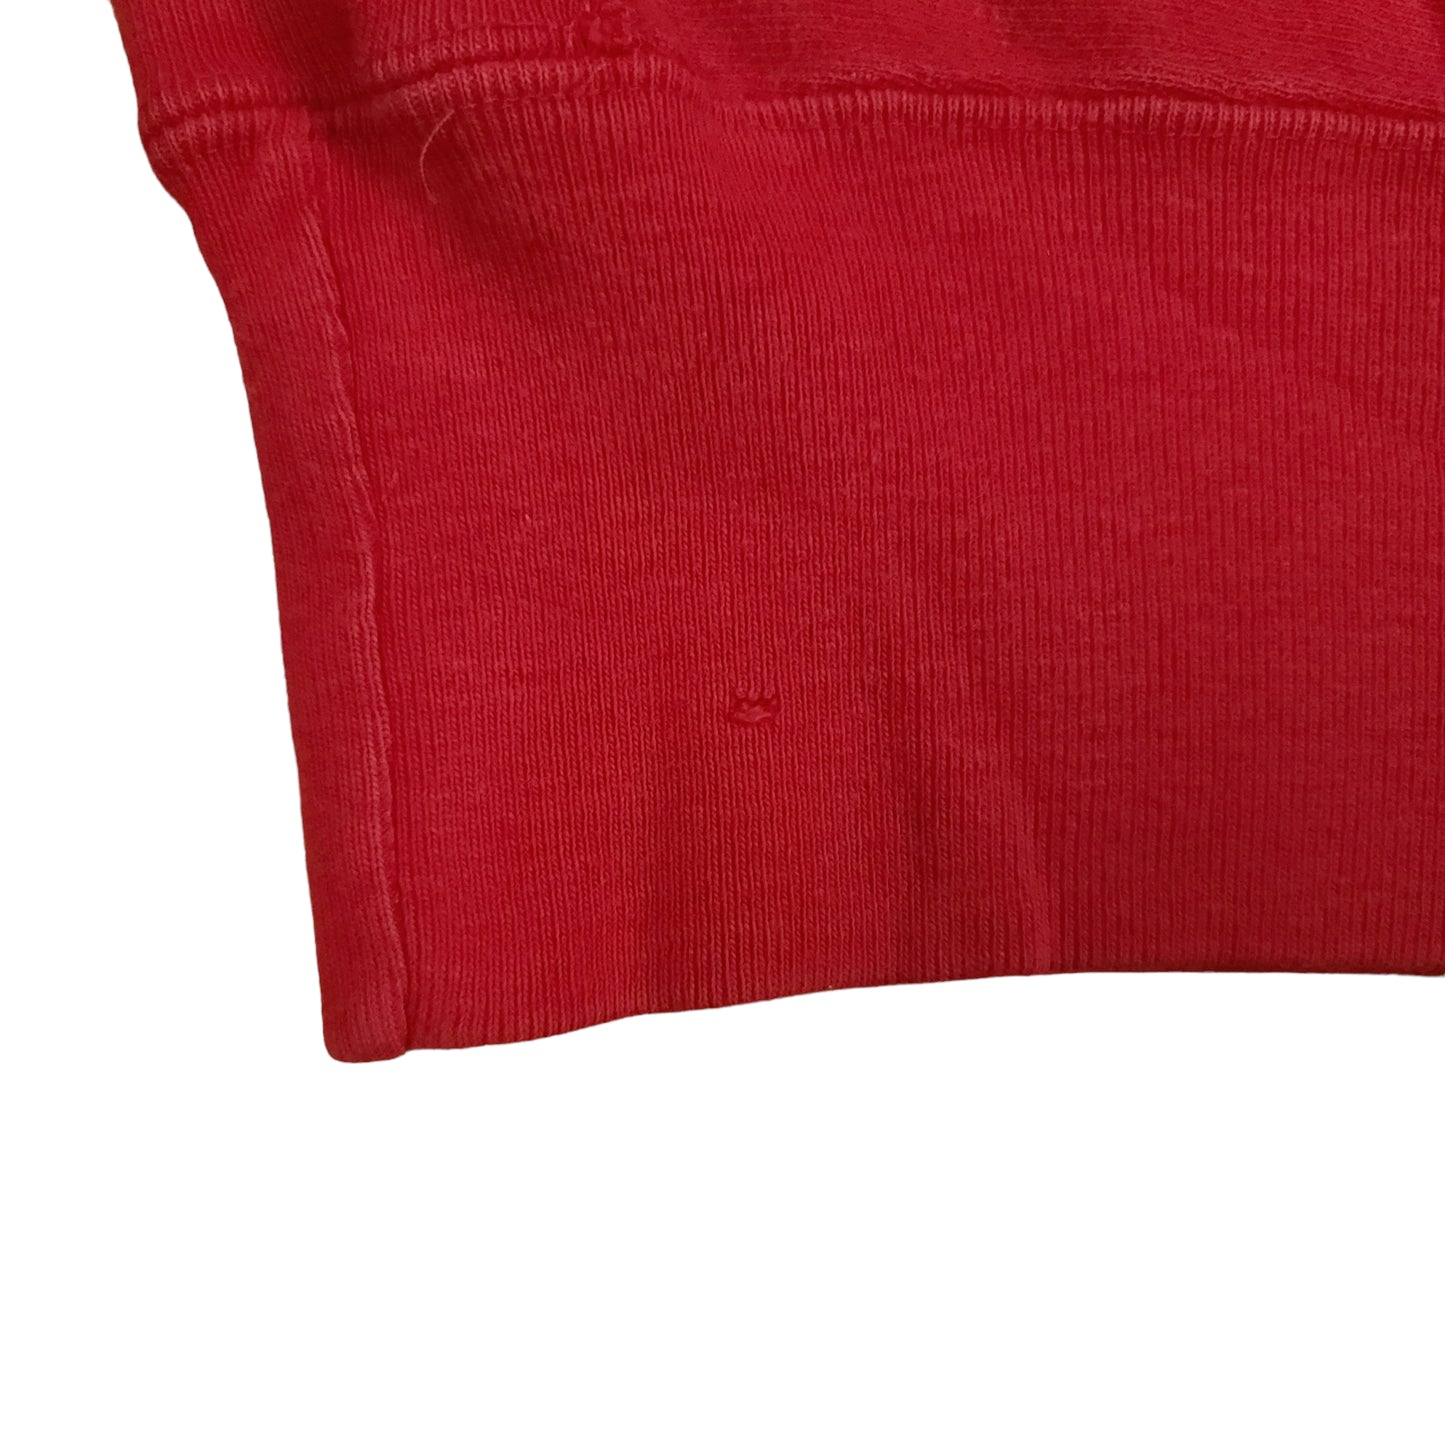 Vintage University Of Nebraska Red Champion Reverse Weave Sweatshirt